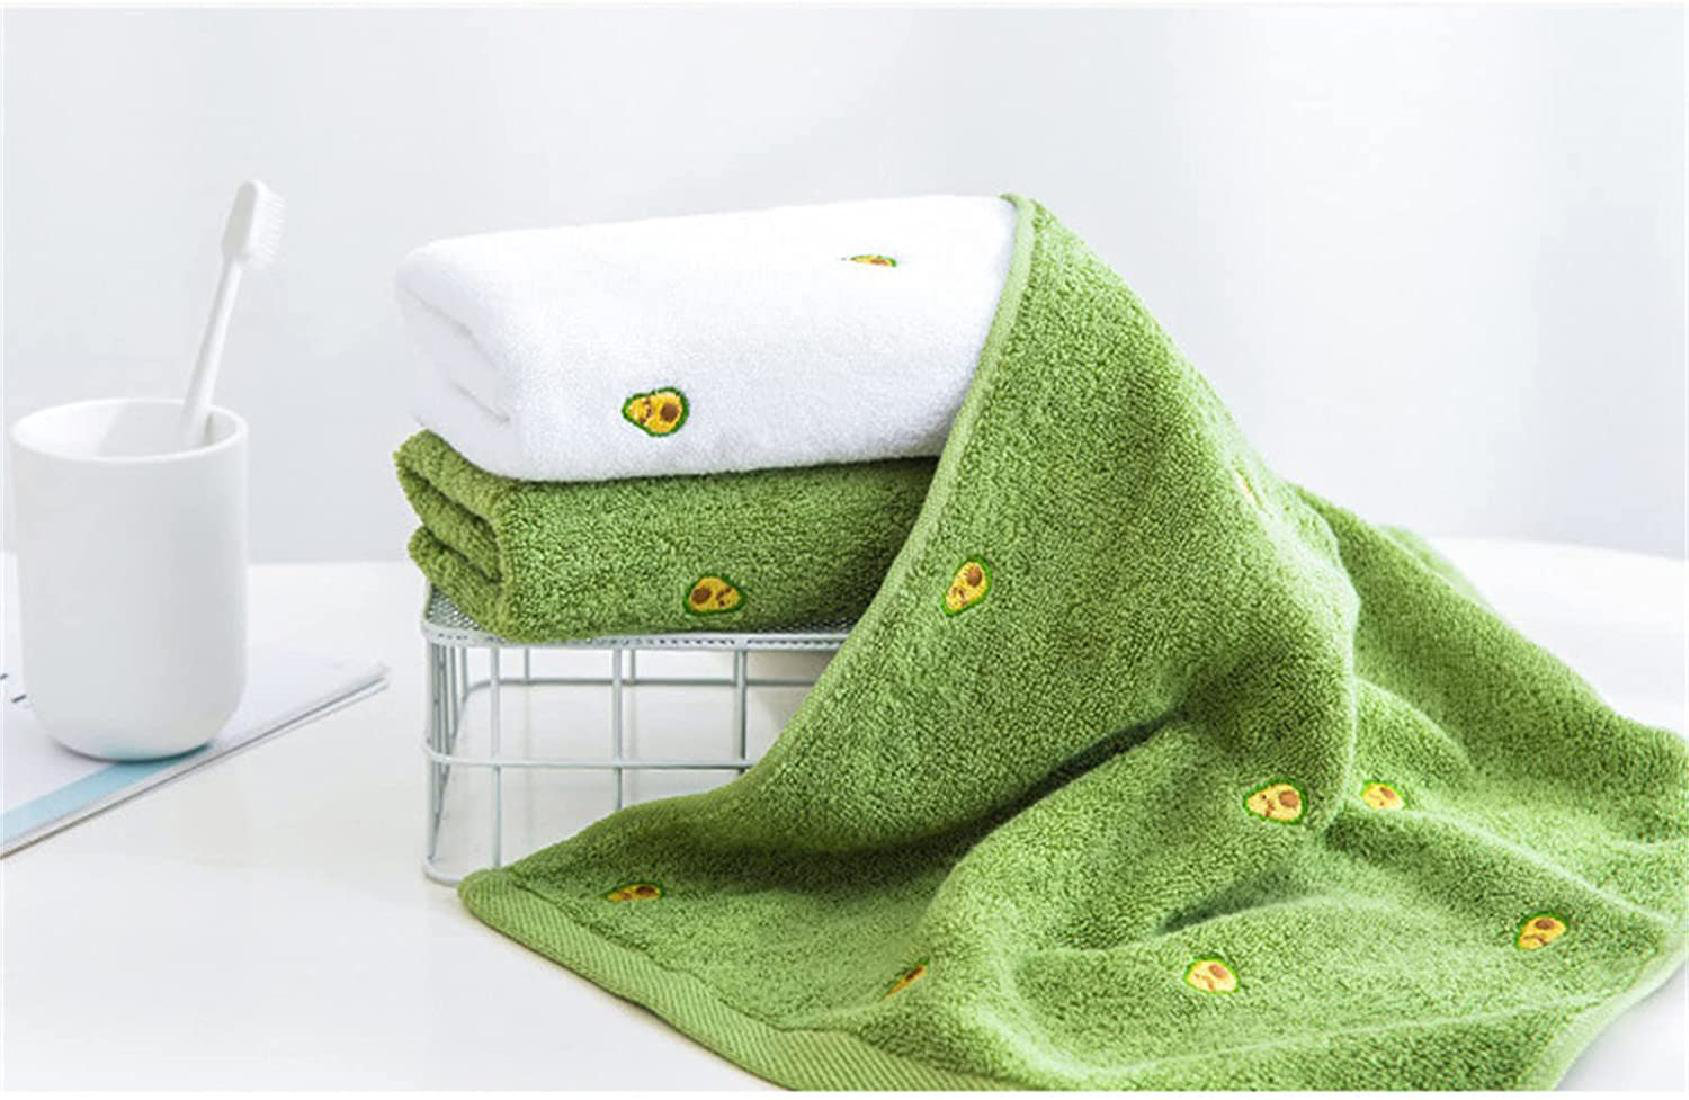 Original Towel Ultra Soft UniquePattern Cotton Face Cloth Hand Bath Luxur Sheet 